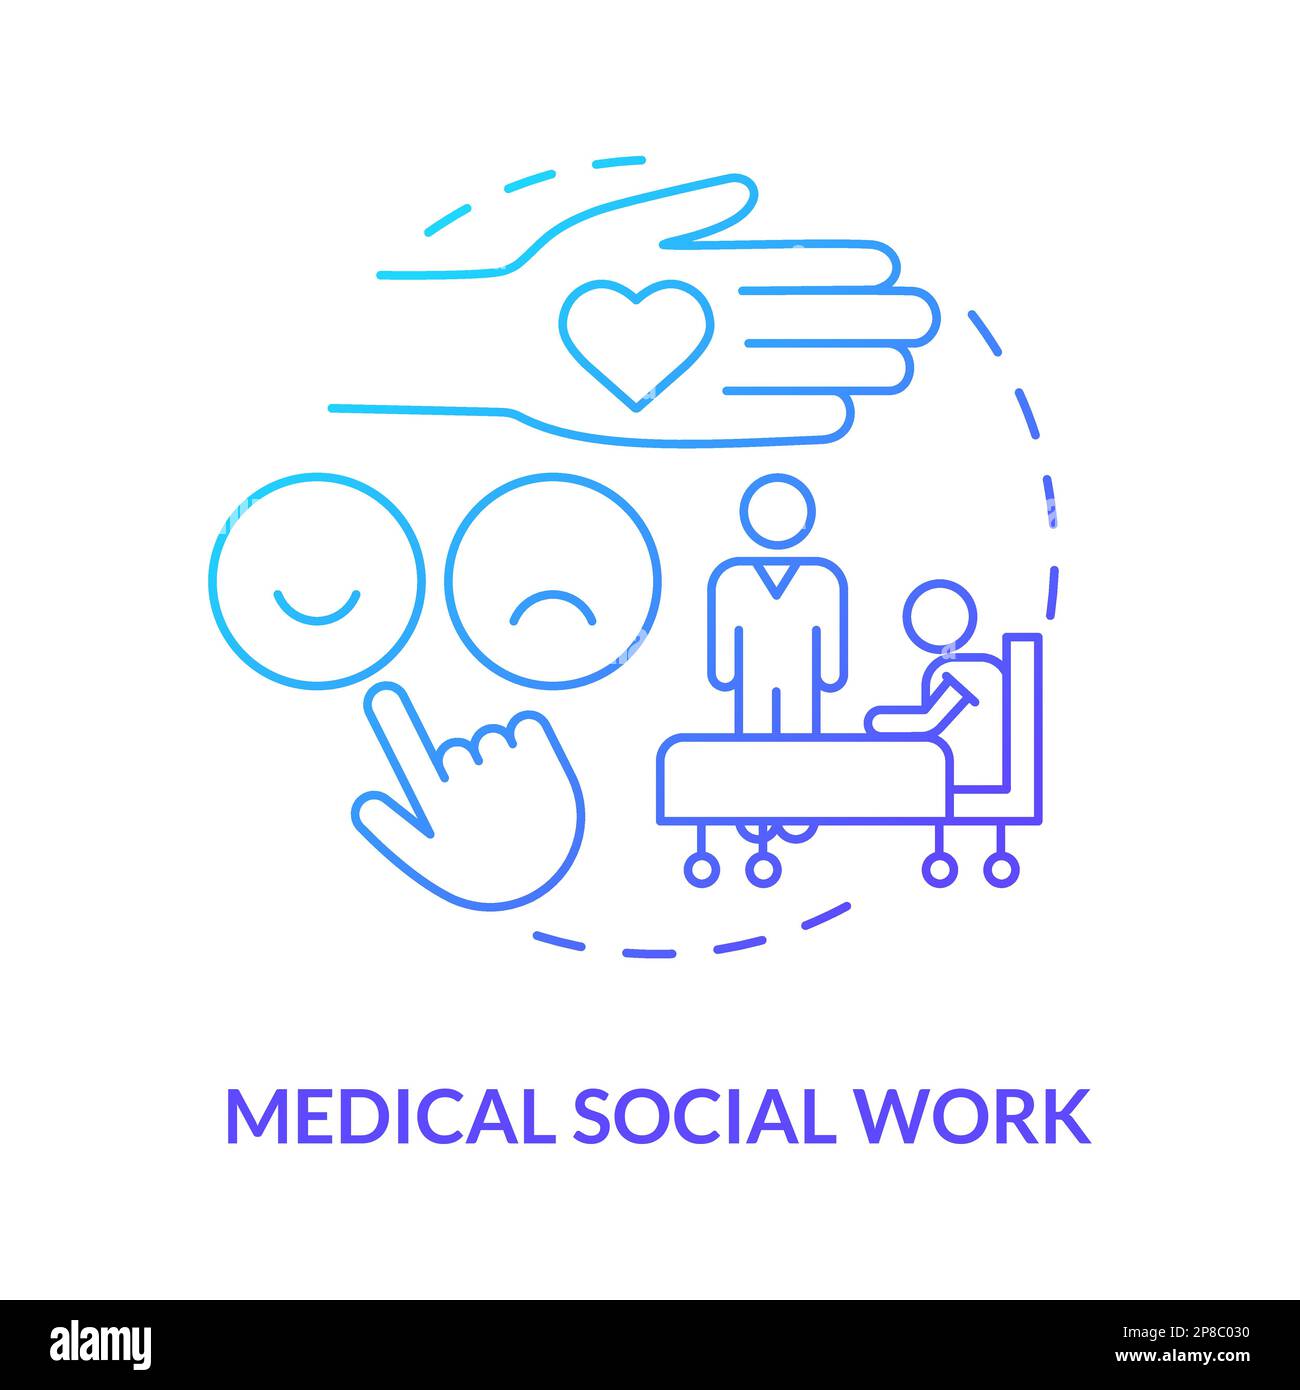 Medical social work blue gradient concept icon Stock Vector